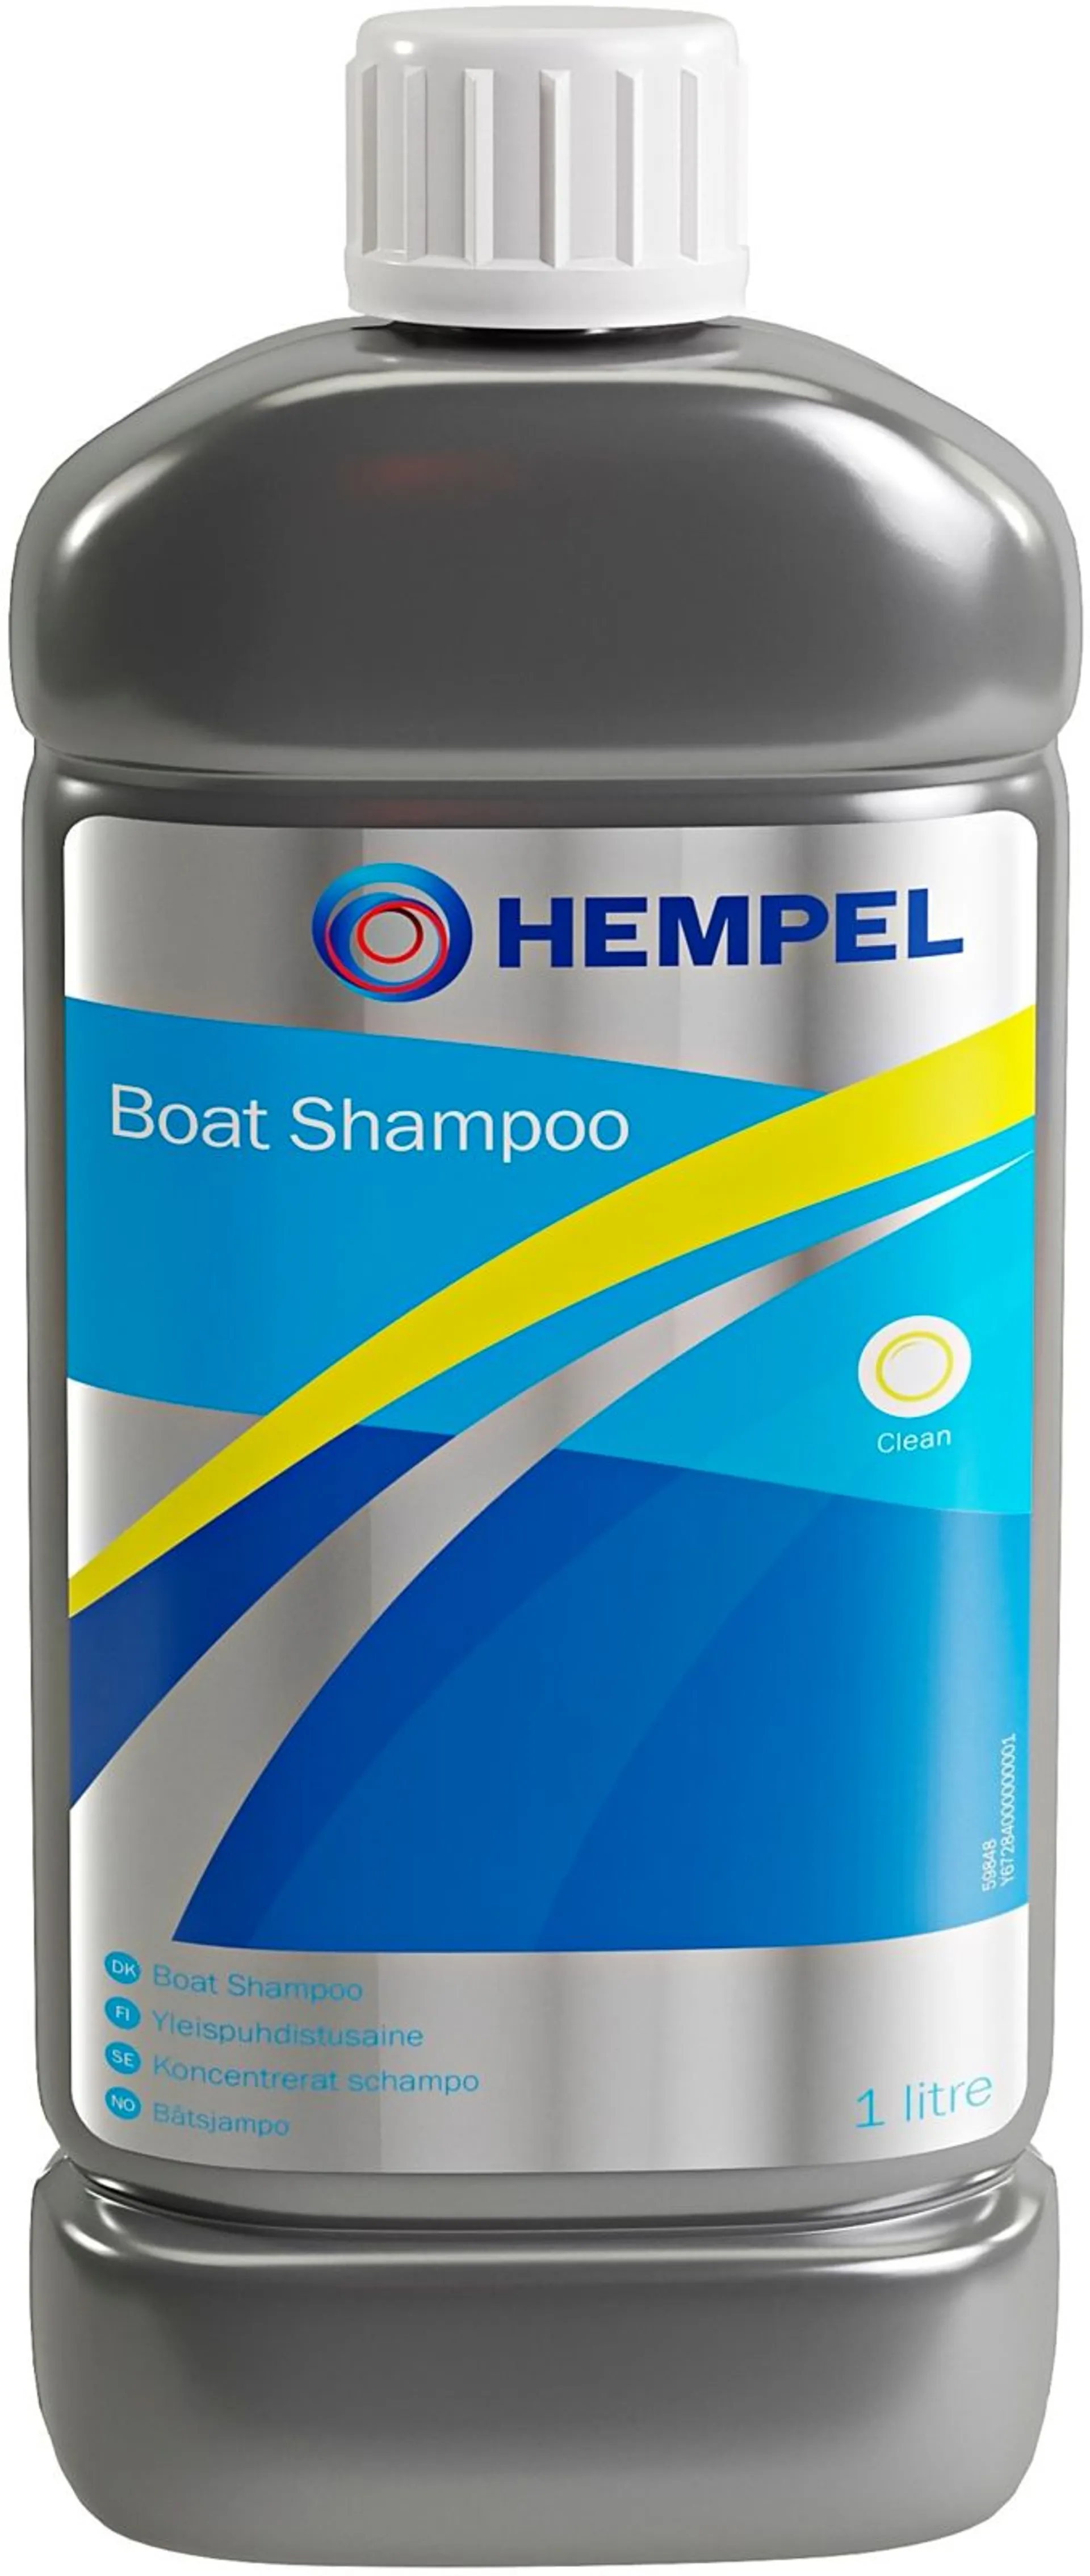 Hempel Boat shampoo 1l